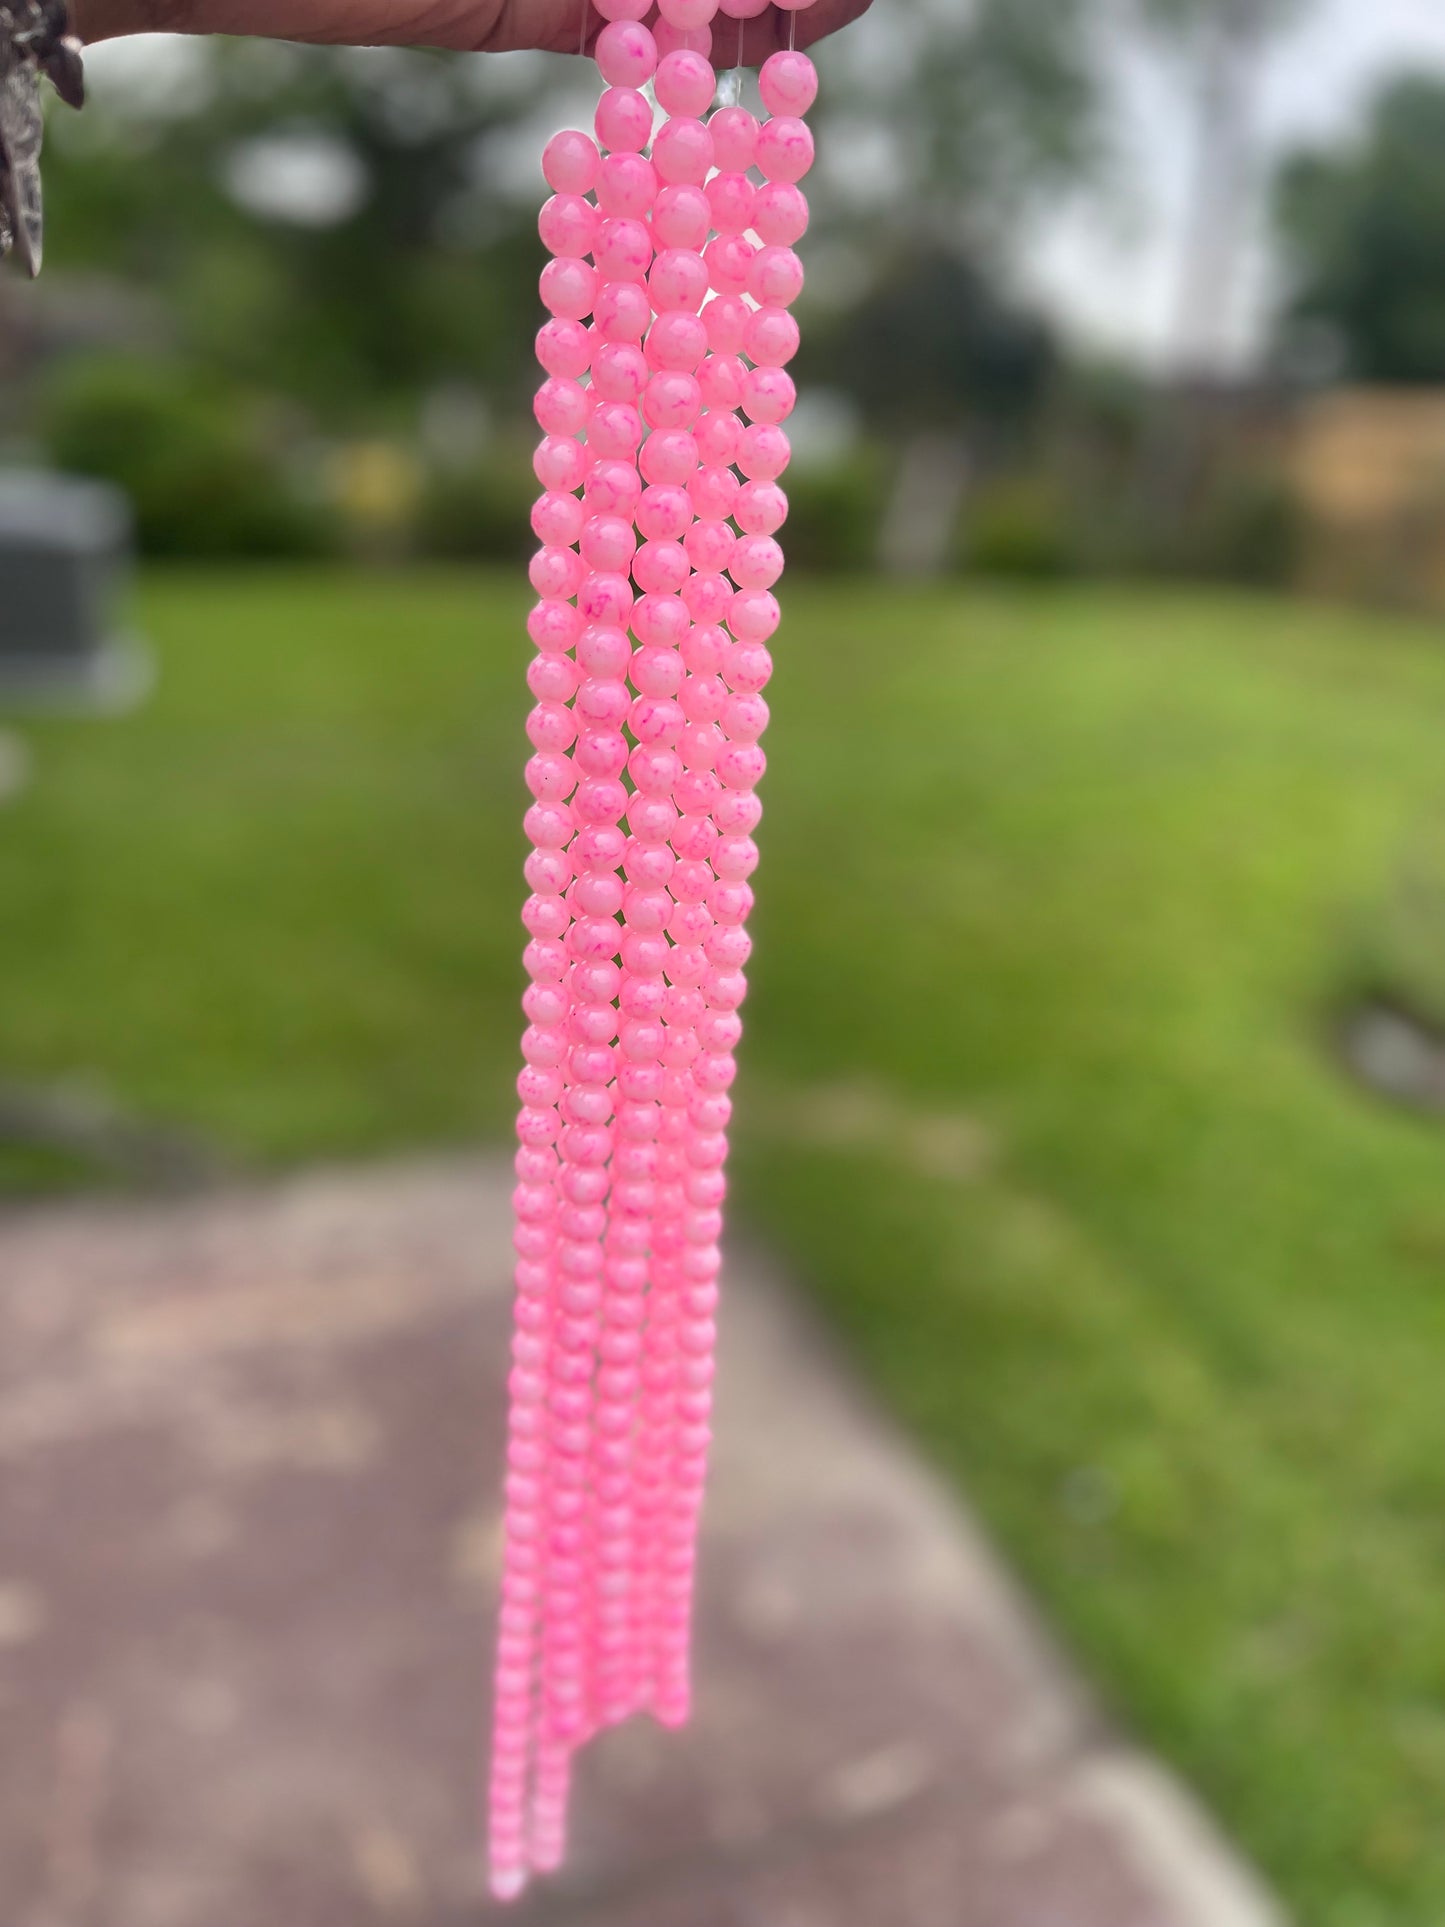 10mm Glass Beads